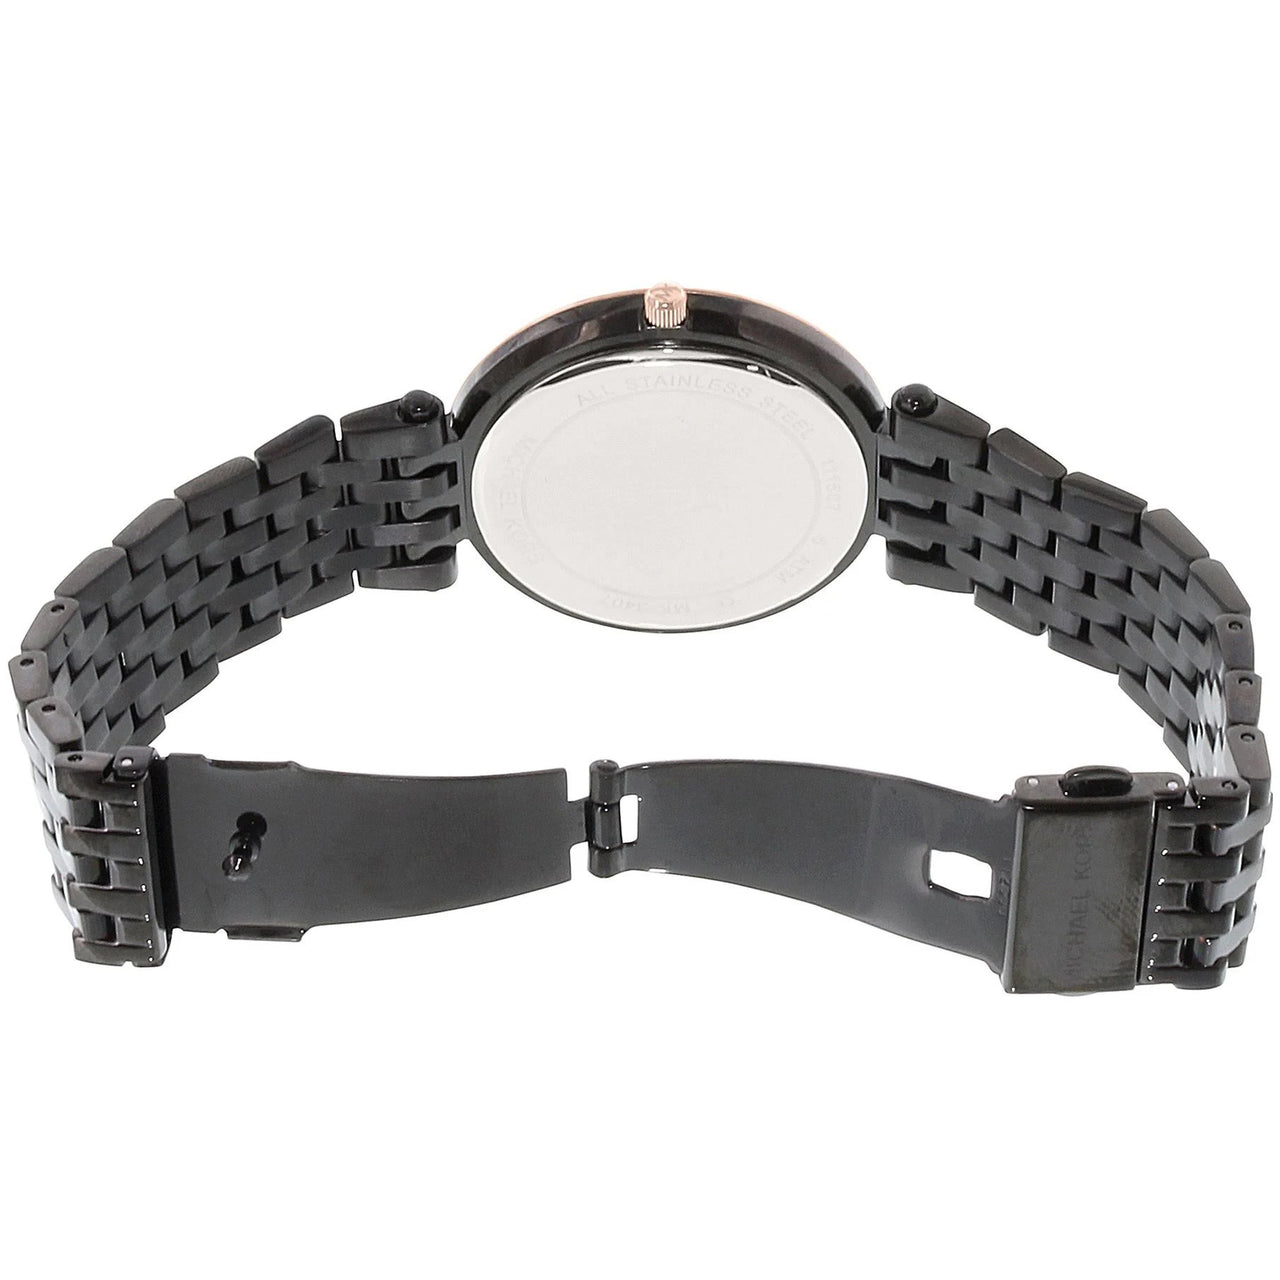 Michael Kors MK3407 - Darci Black Dial Black Carbon-plated Ladies Watch